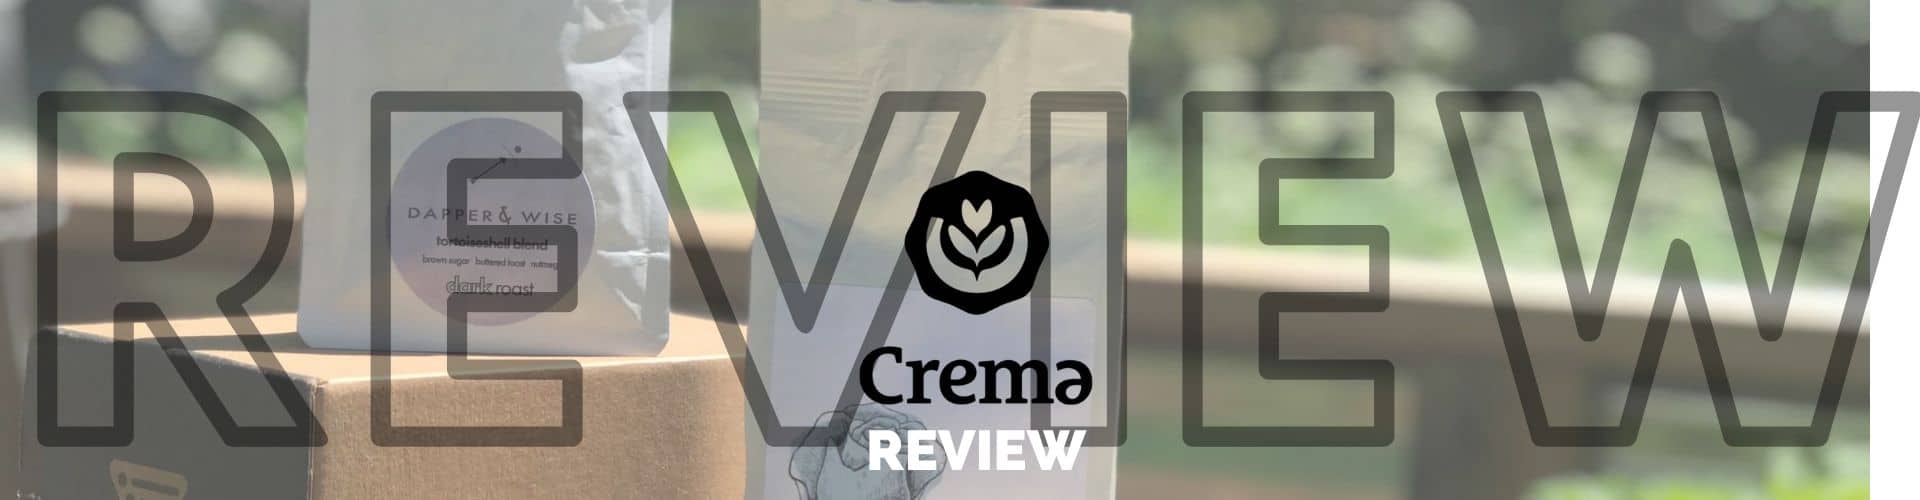 Crema Co Review